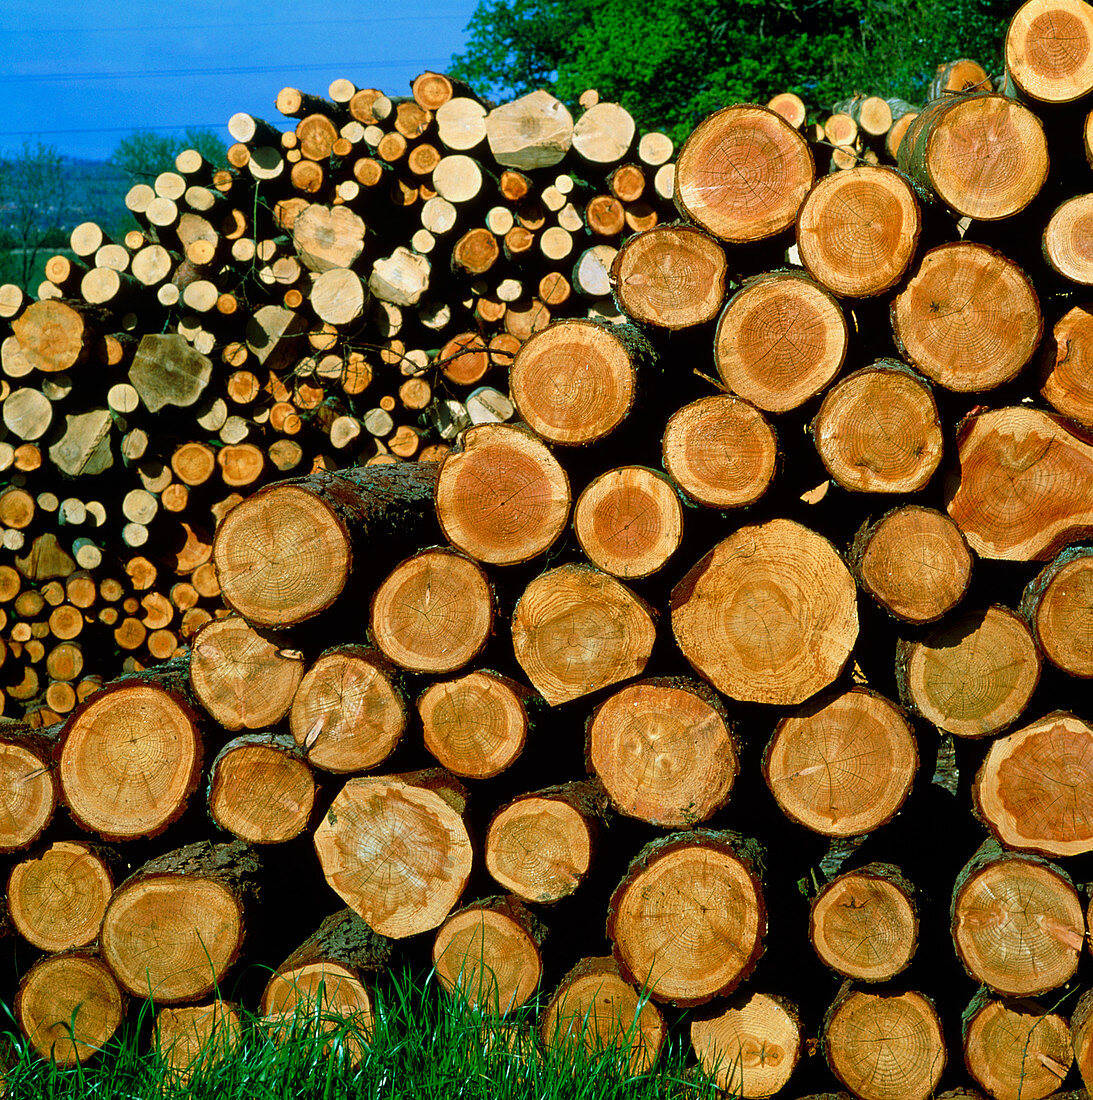 Felled logs